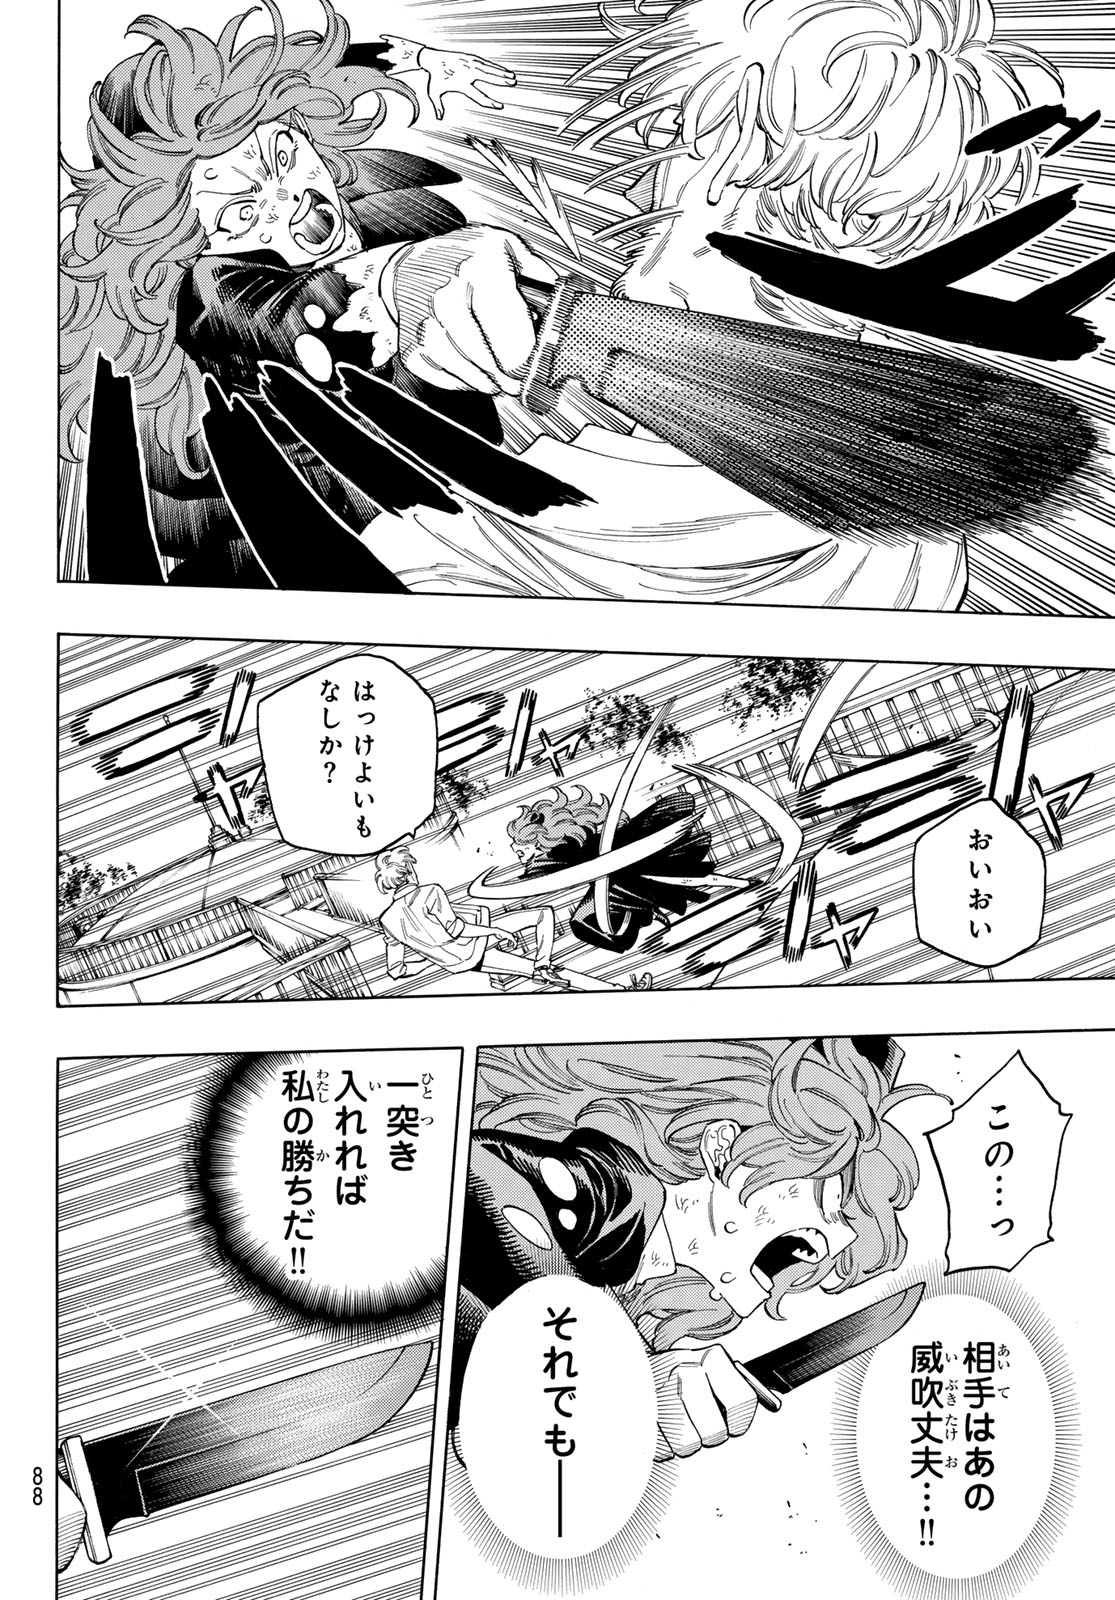 Akabane Honeko no Bodyguard - Chapter 83 - Page 8